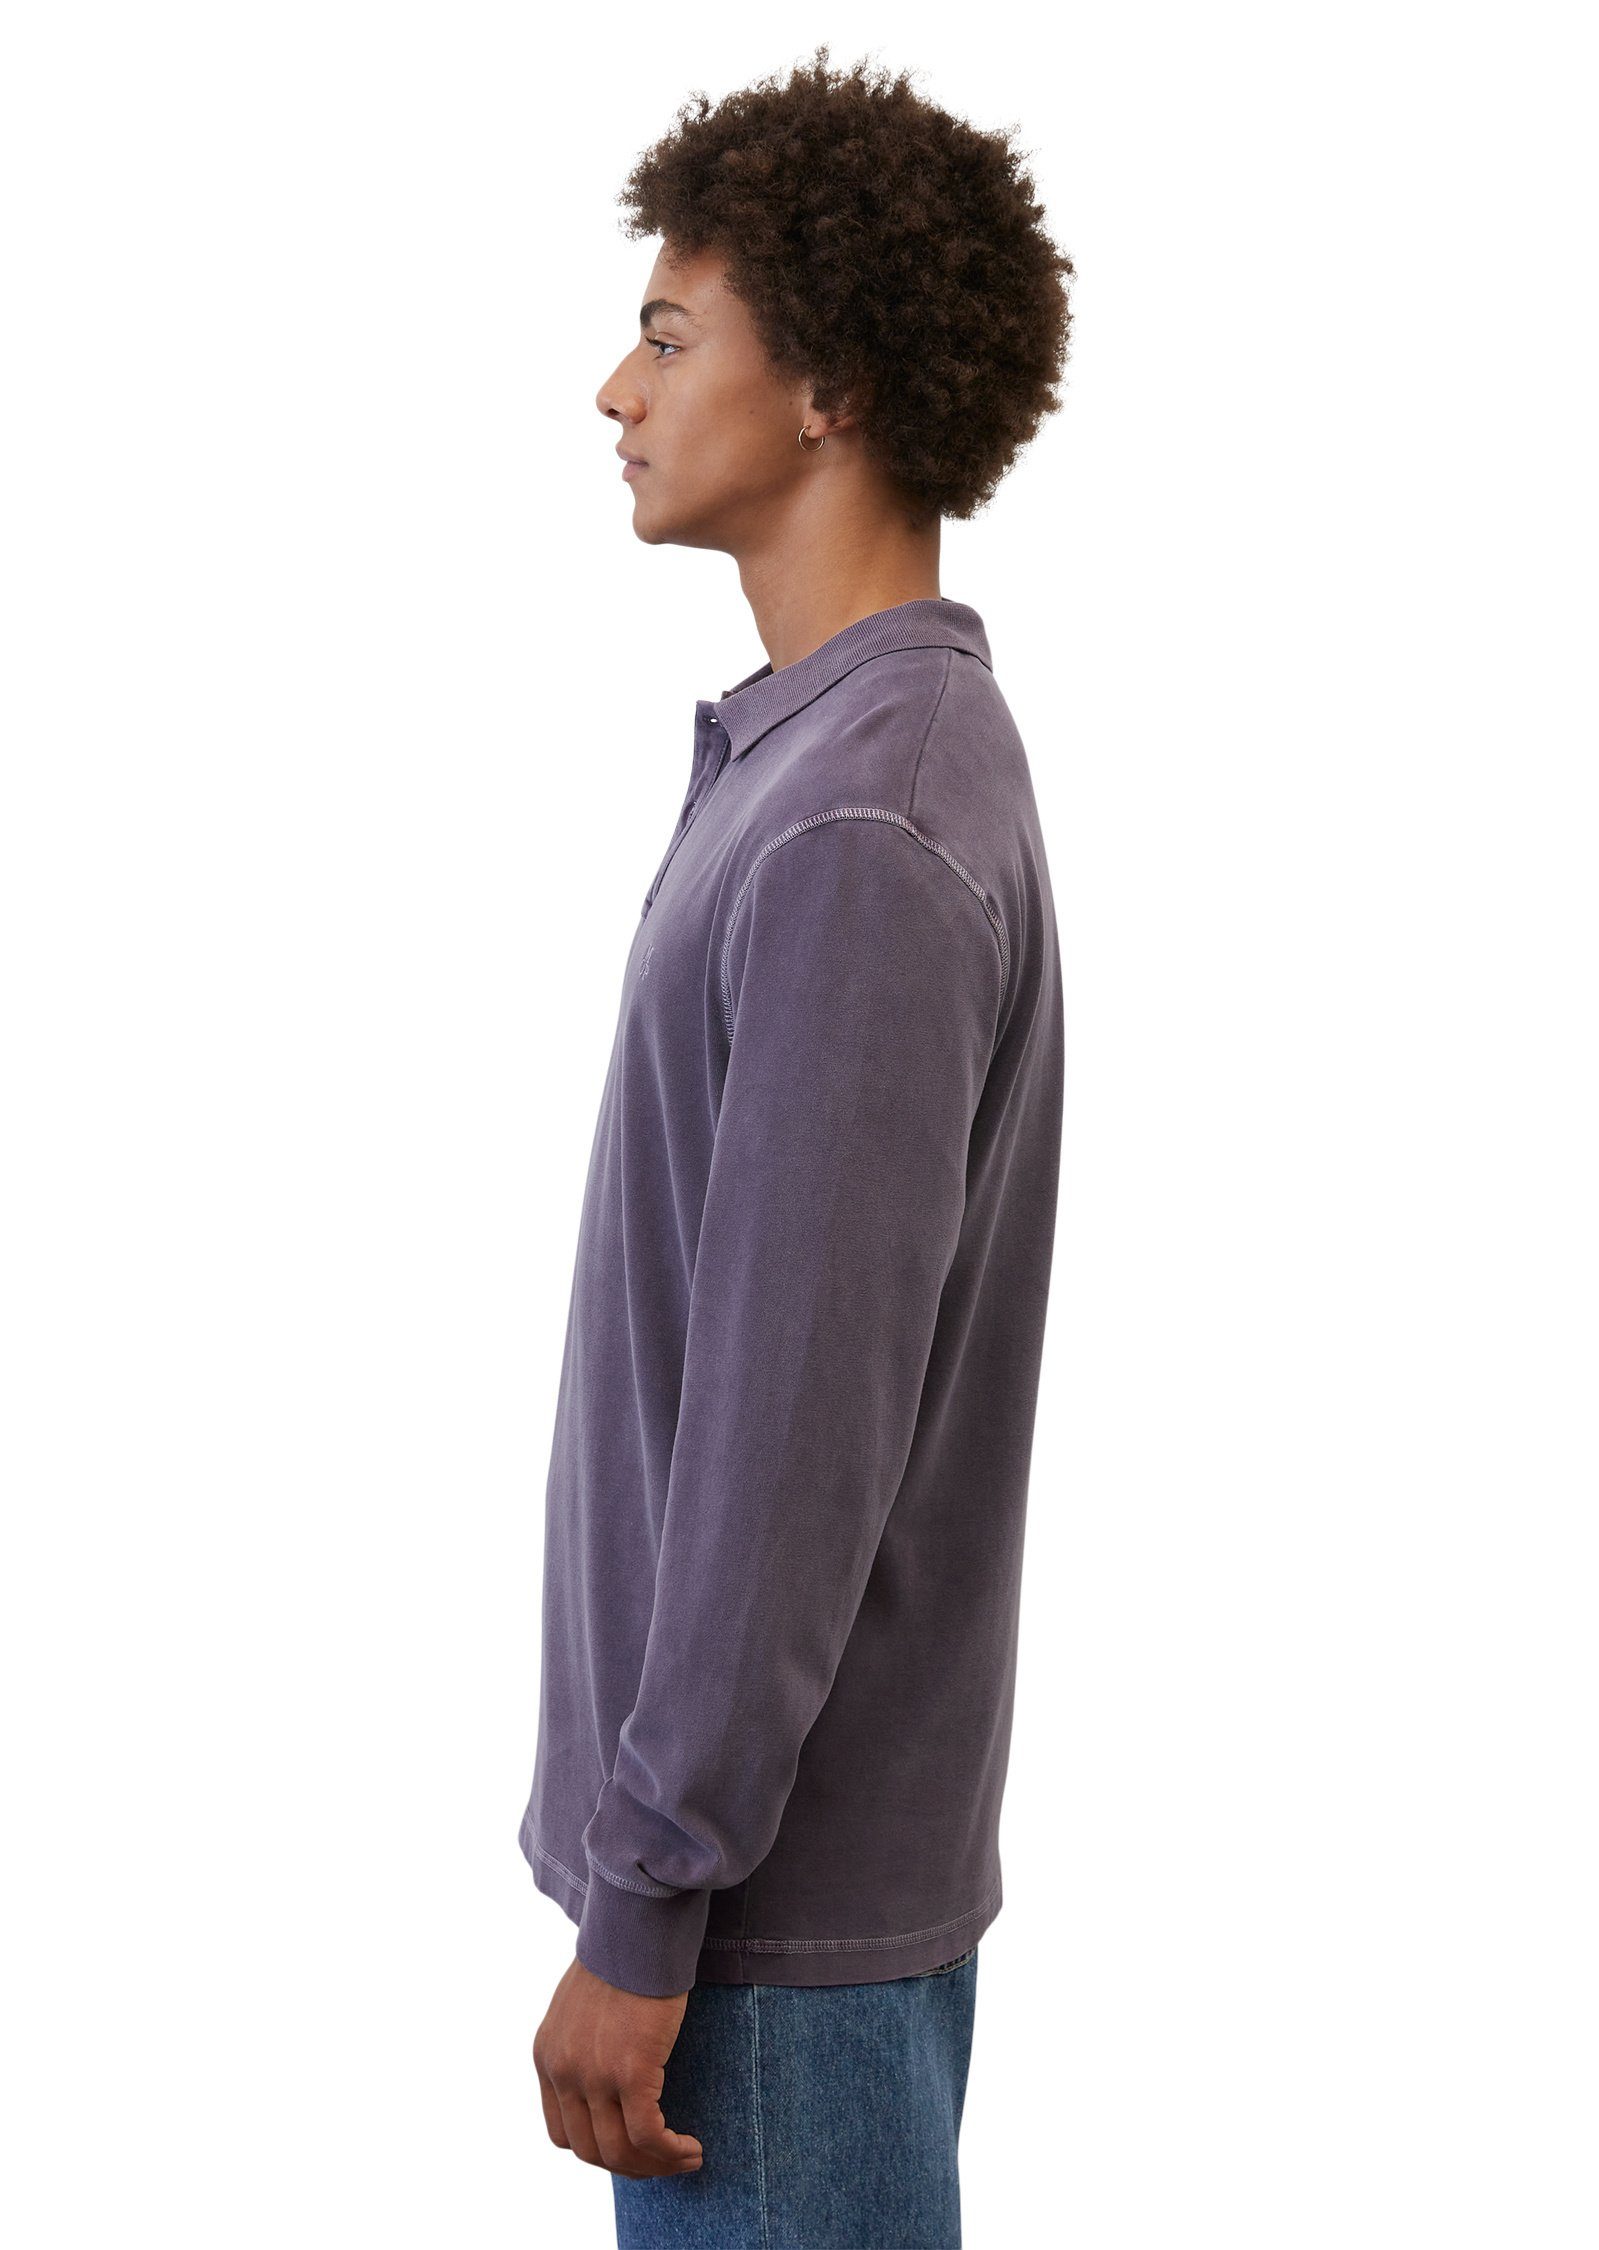 Marc O'Polo softer Langarm-Poloshirt lila Bio-Baumwolle aus